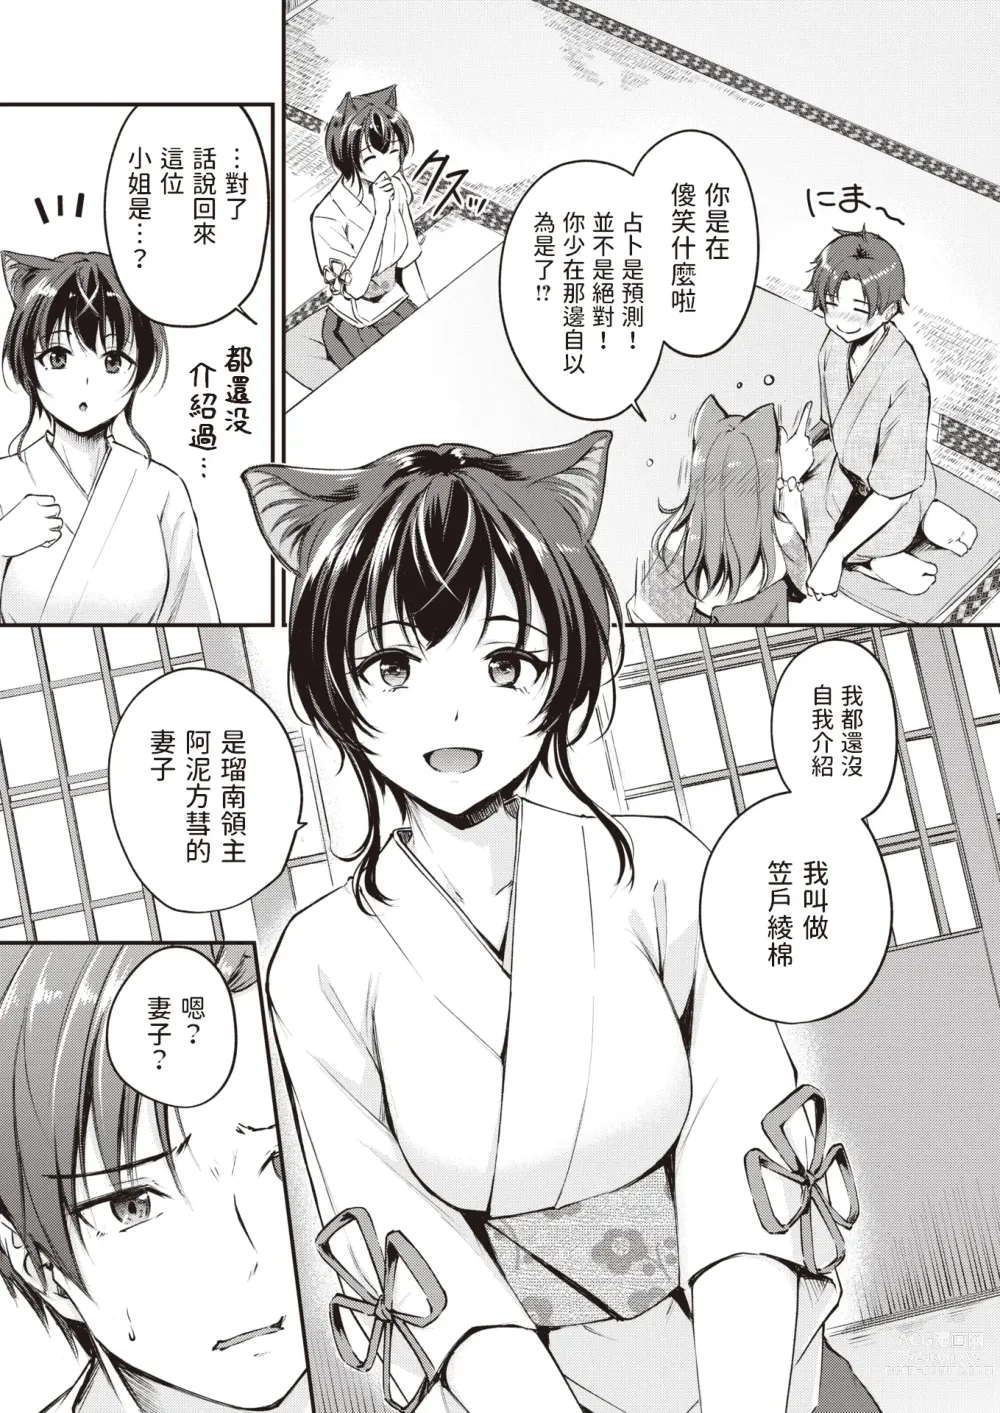 Page 5 of manga Kemomimi no Senjutsushi ~Yoko Mimi no Dendoushi~